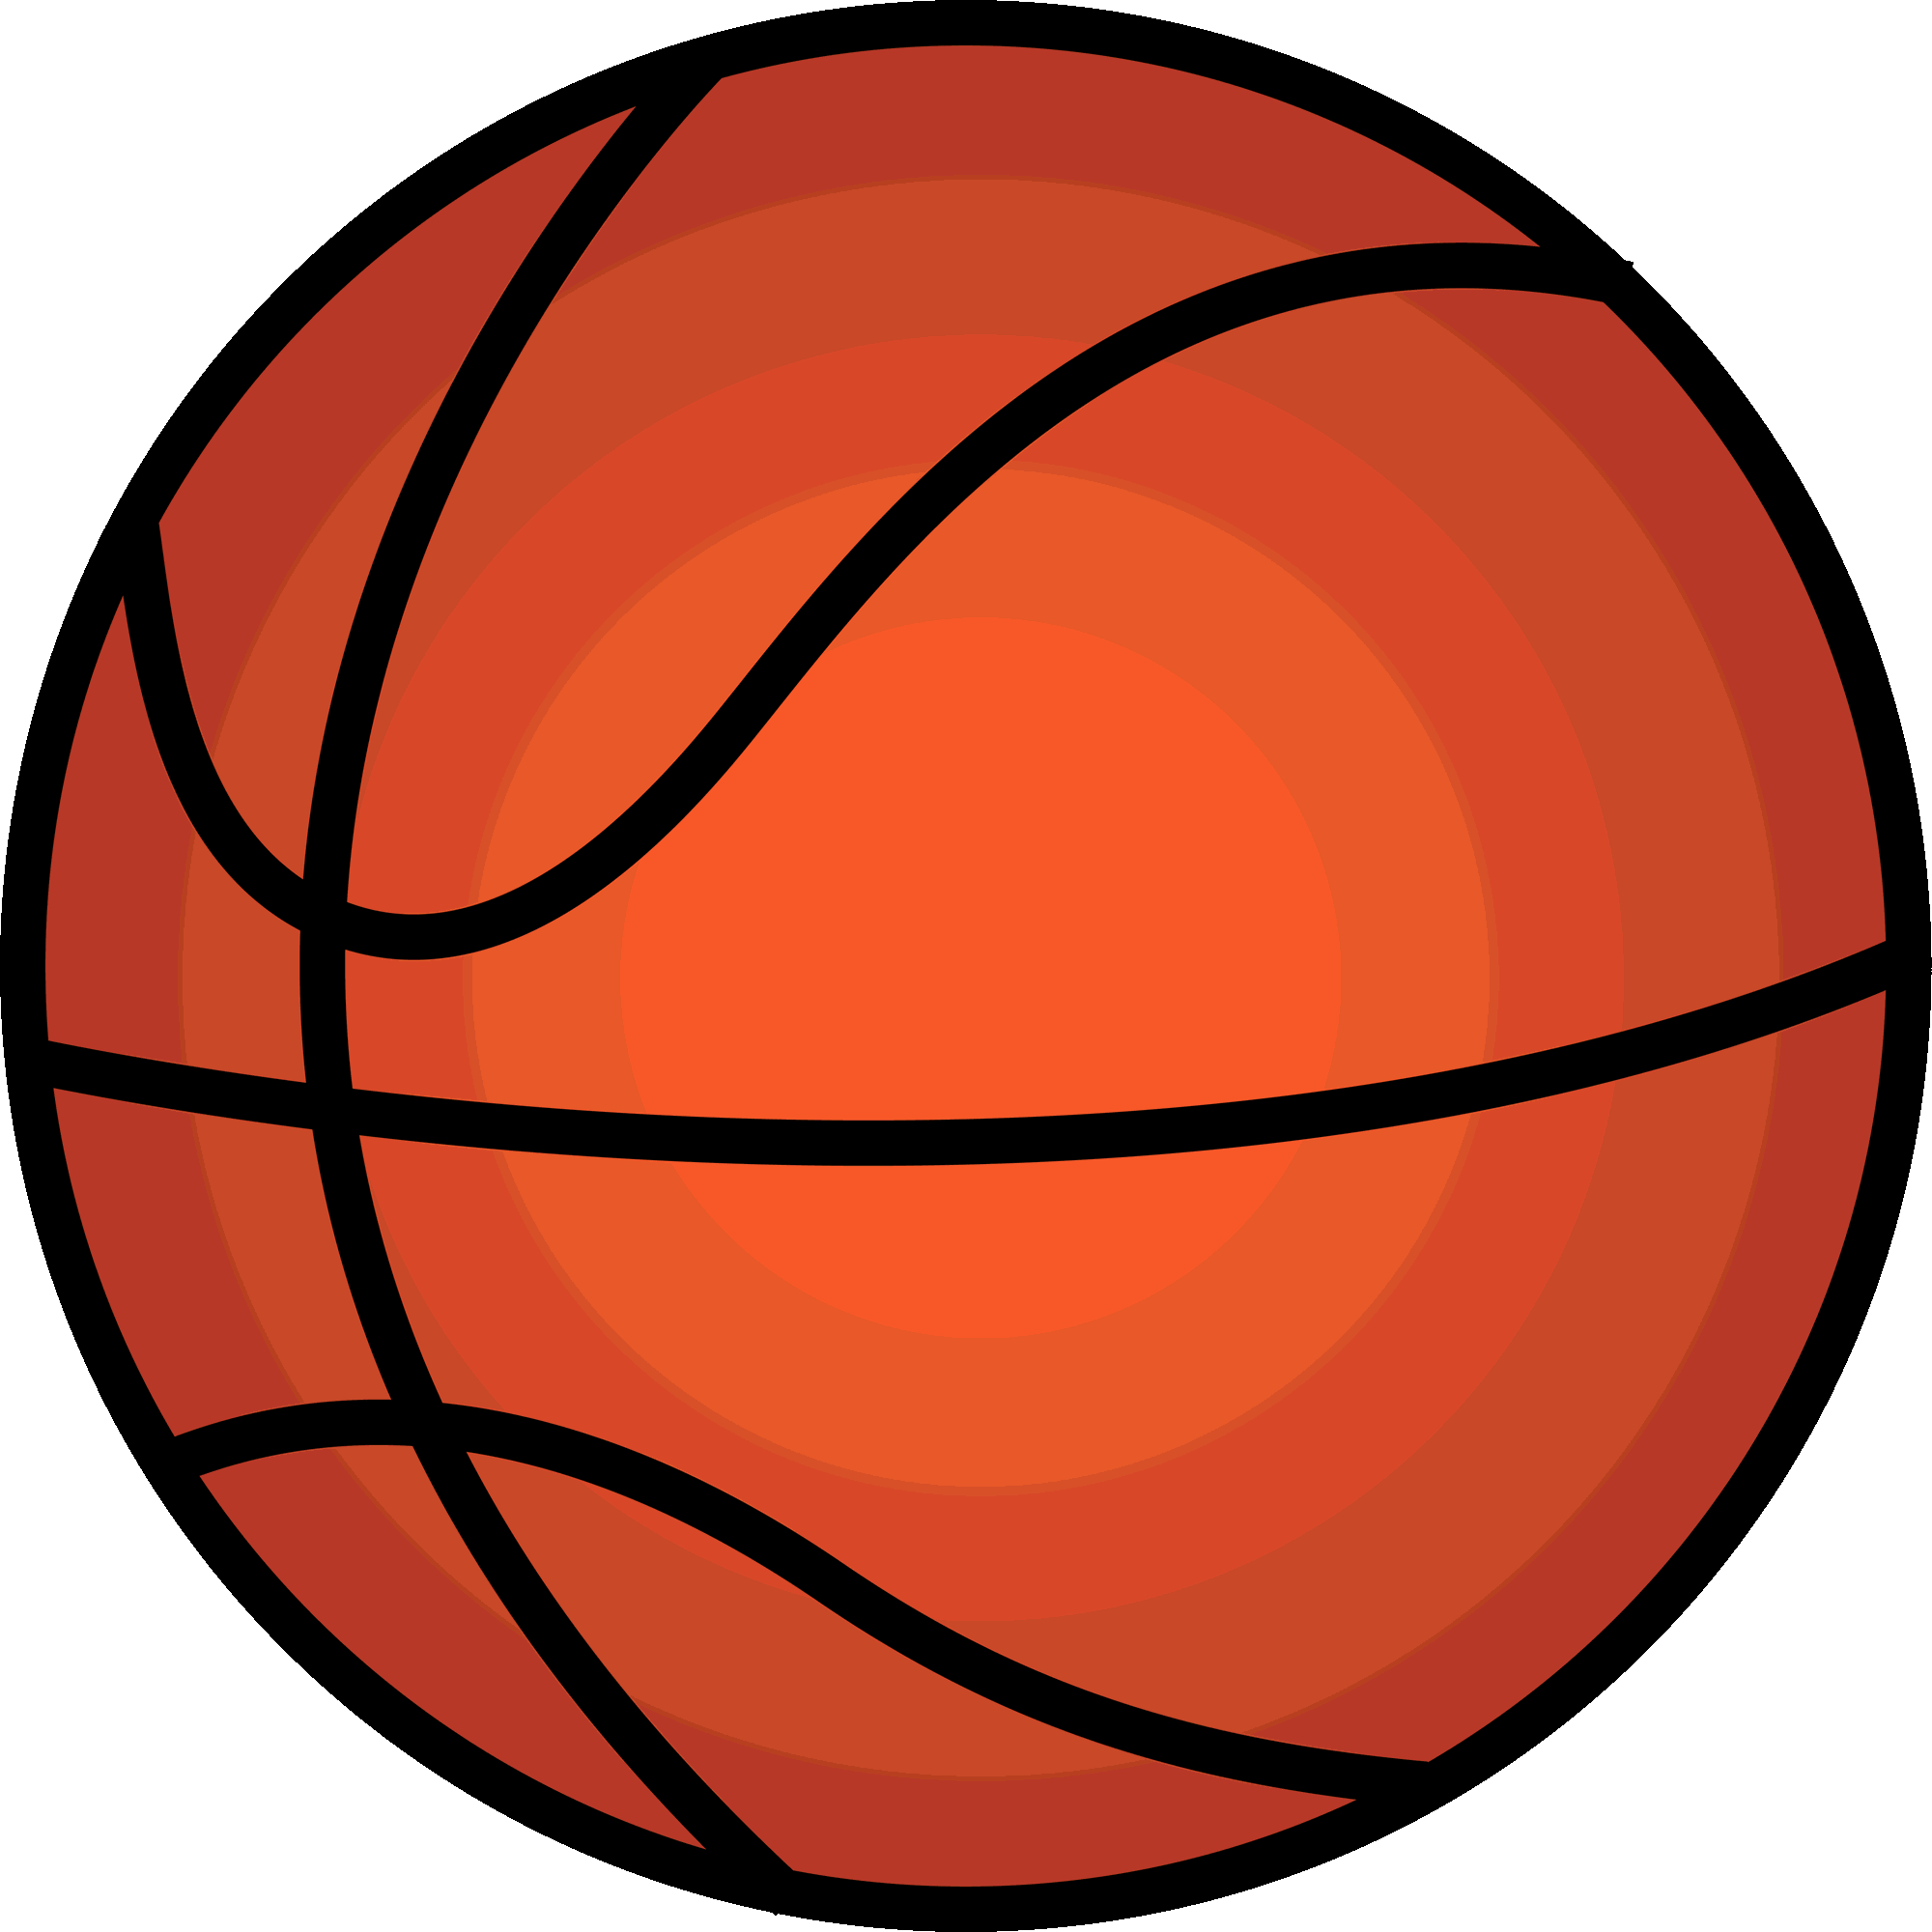 Bälle Basketball-Sport High Quality and Resolution desktop ...